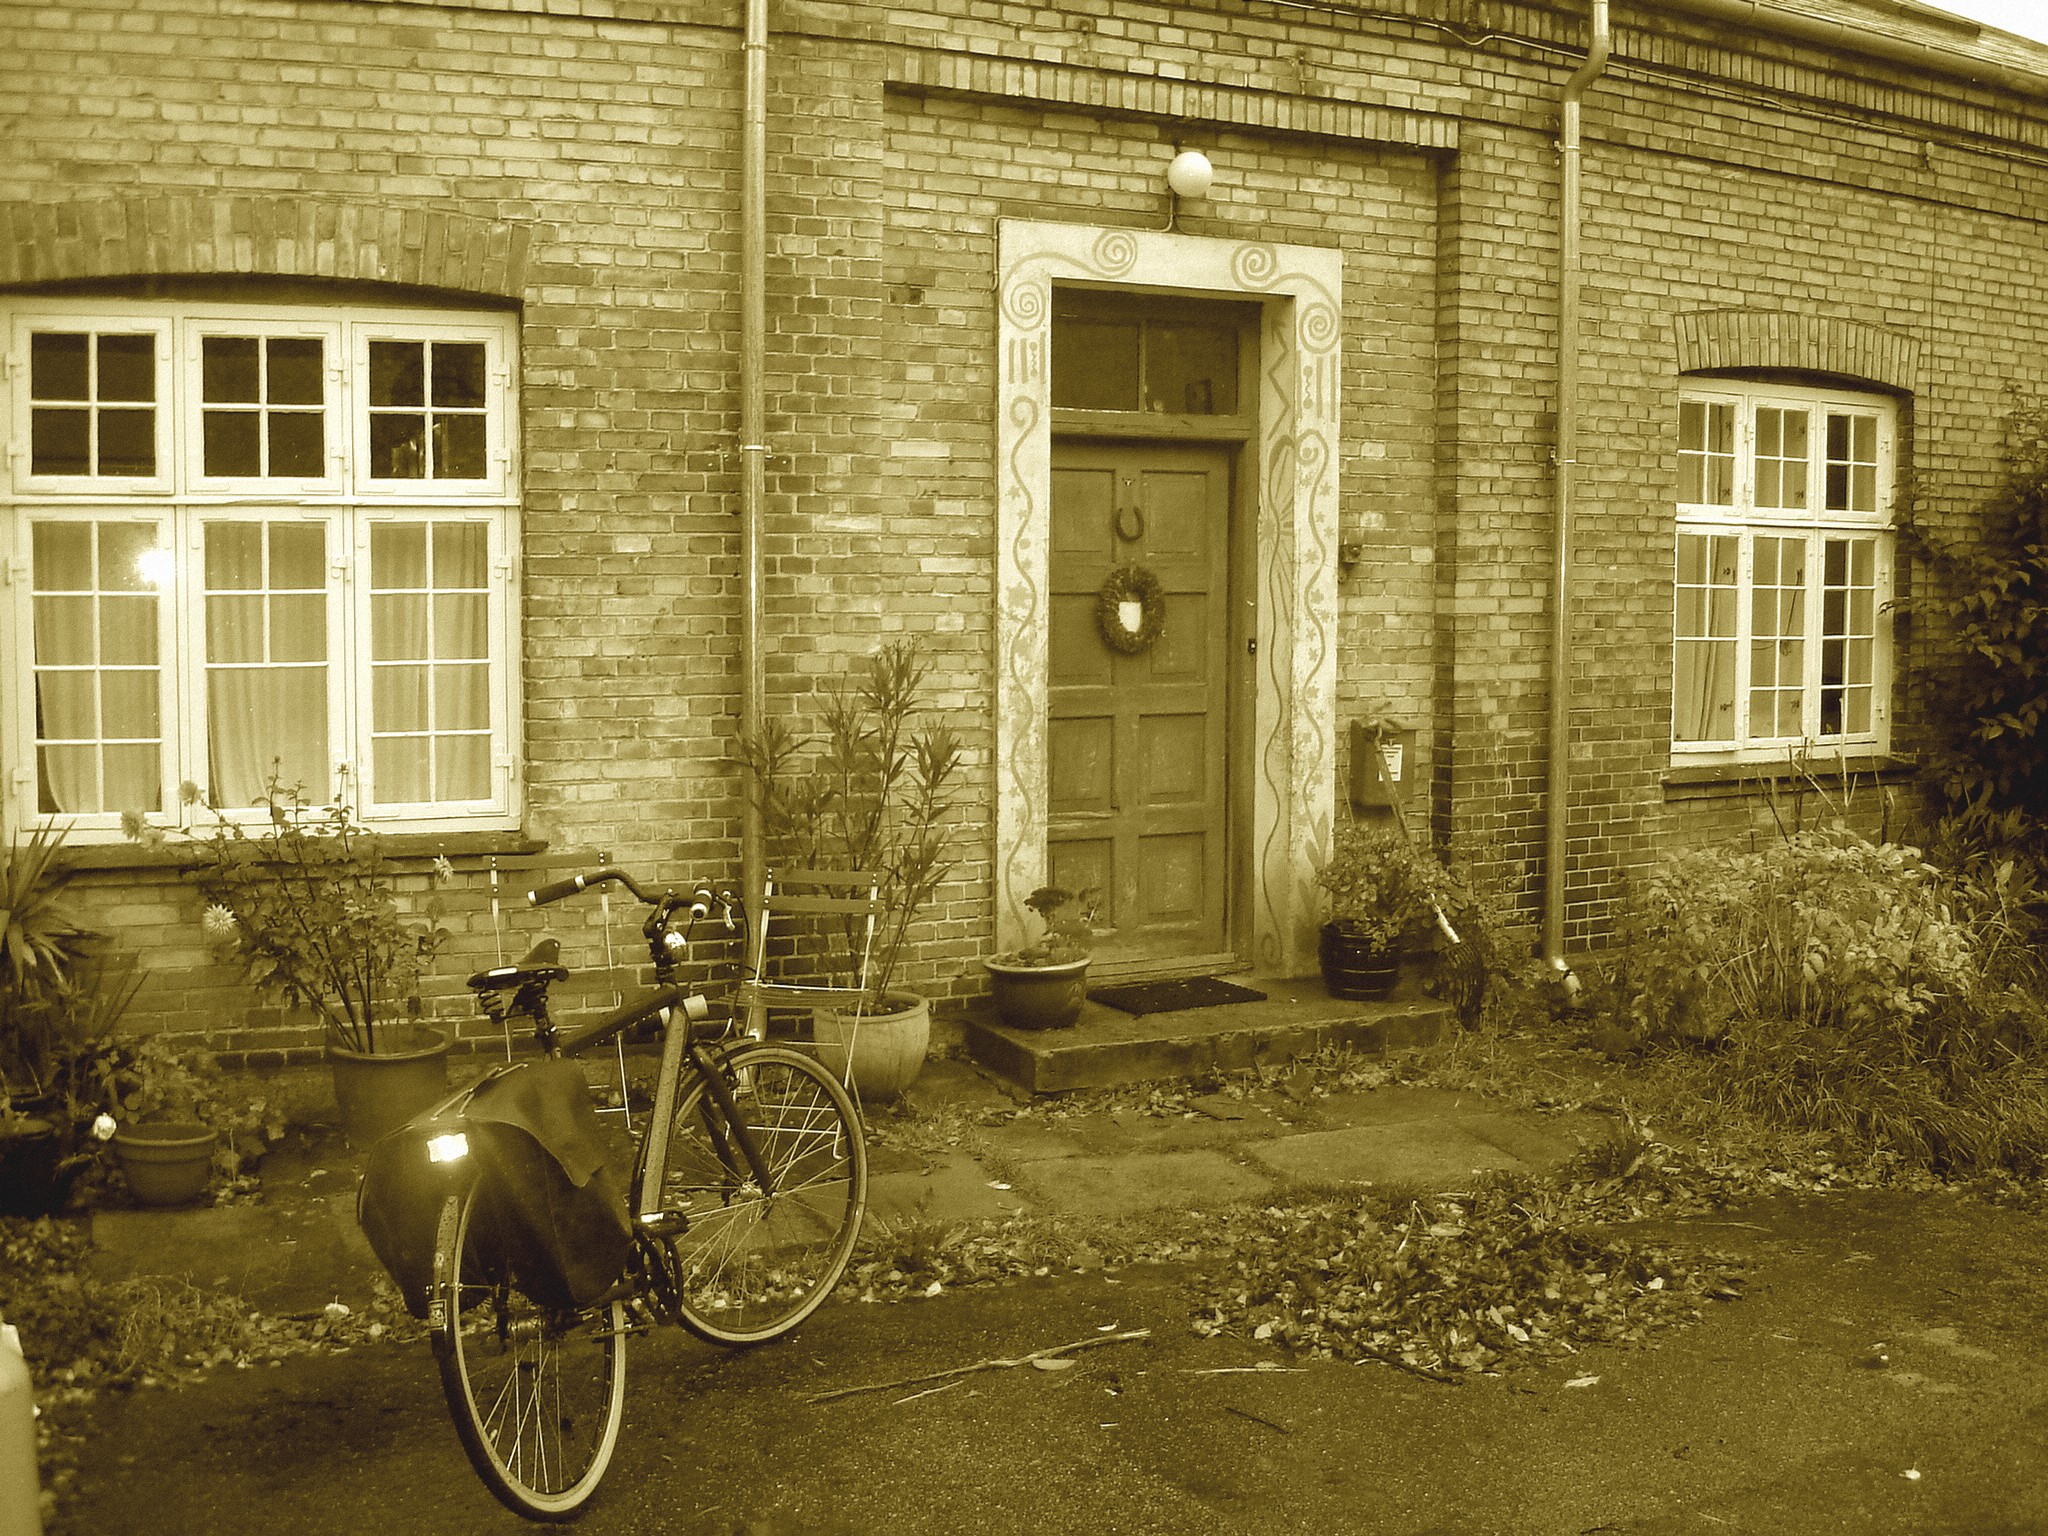 Vélo et maison danoise  / Bike and danish house - Christiania / Copenhague - Copenhague.  26 octobre 2008 - Sepia